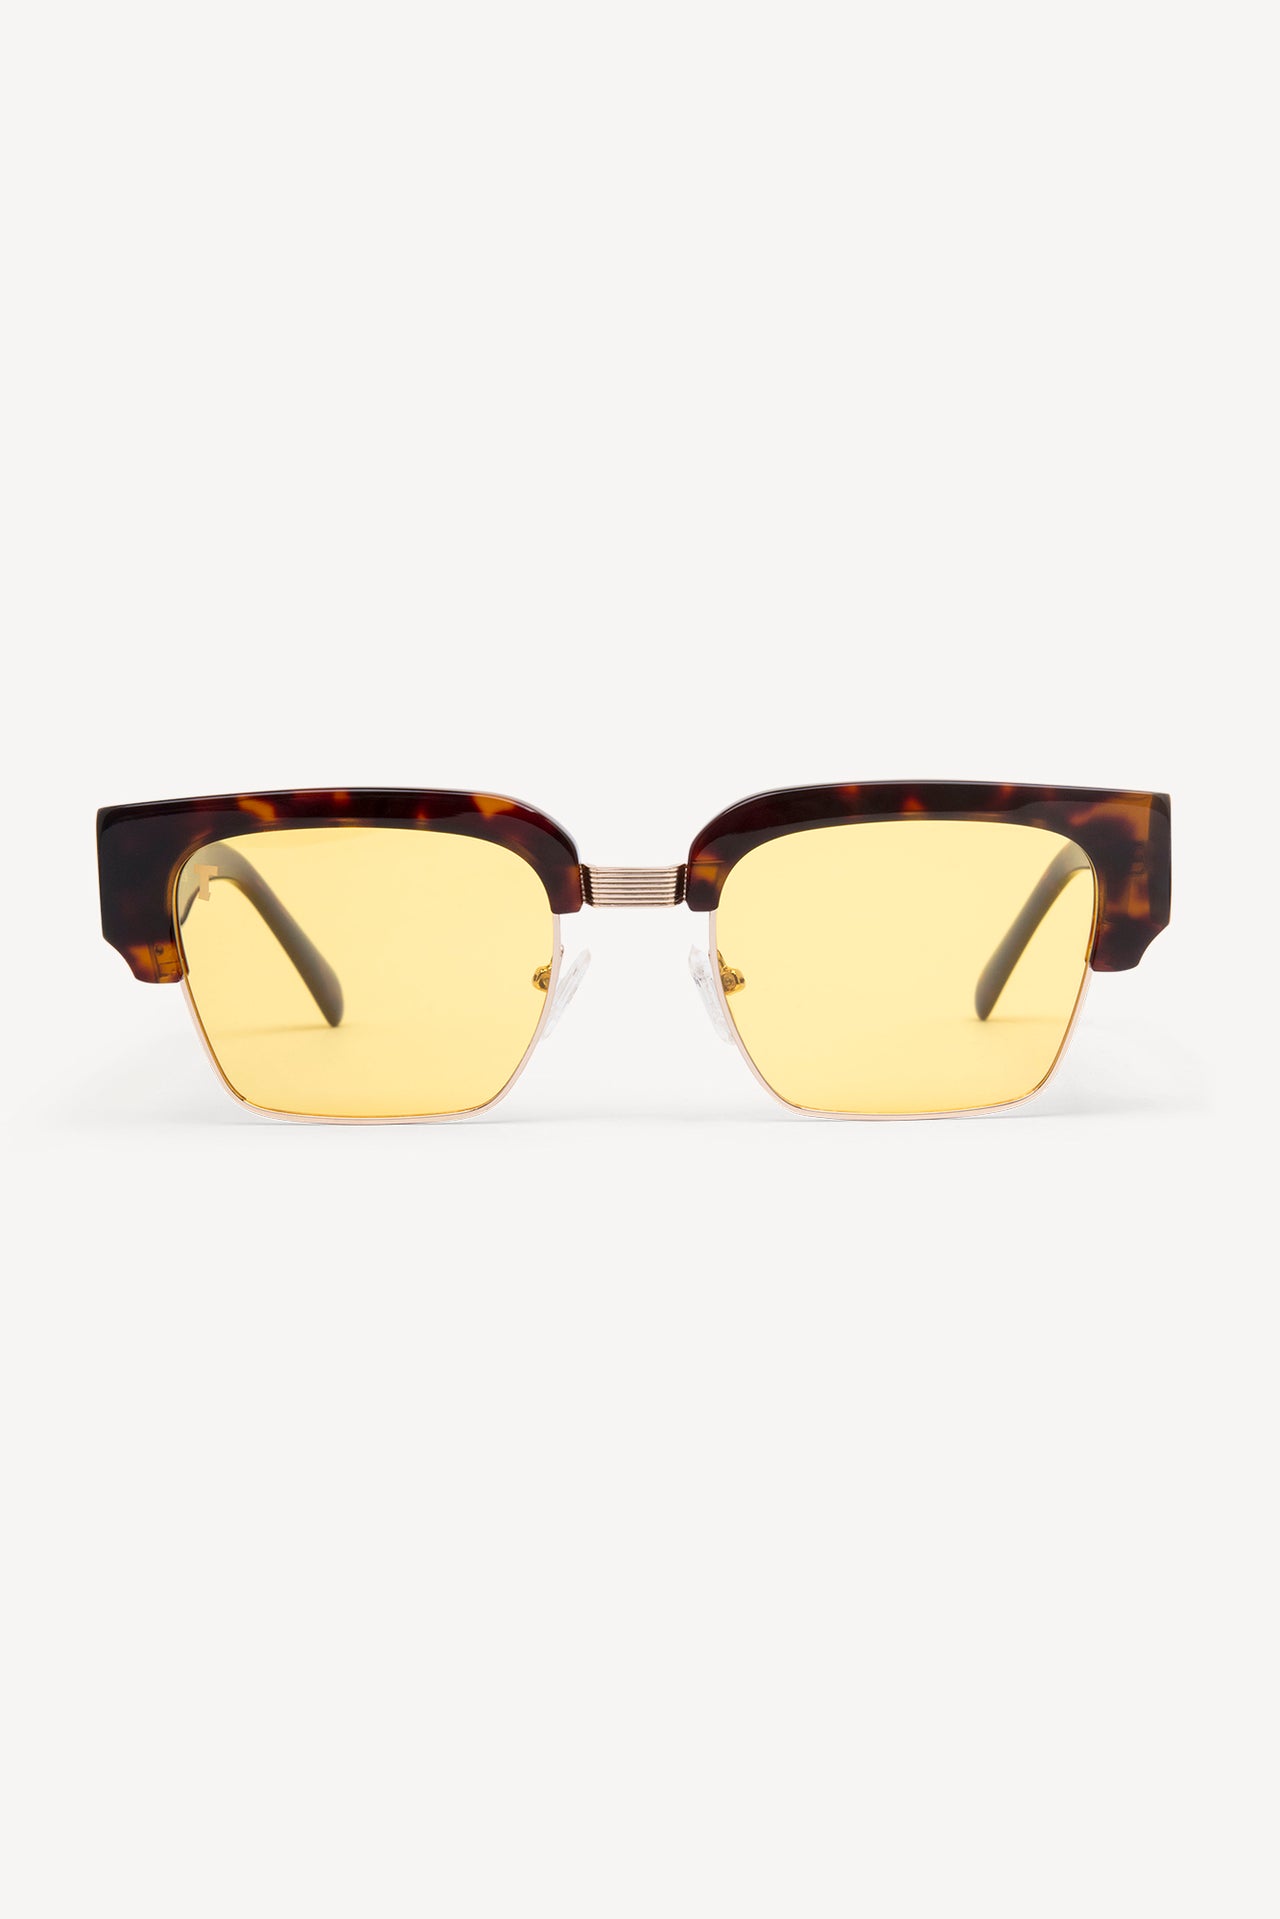 TOATIE Monte Carlo Sunglasses TORTOISE/YELLOW